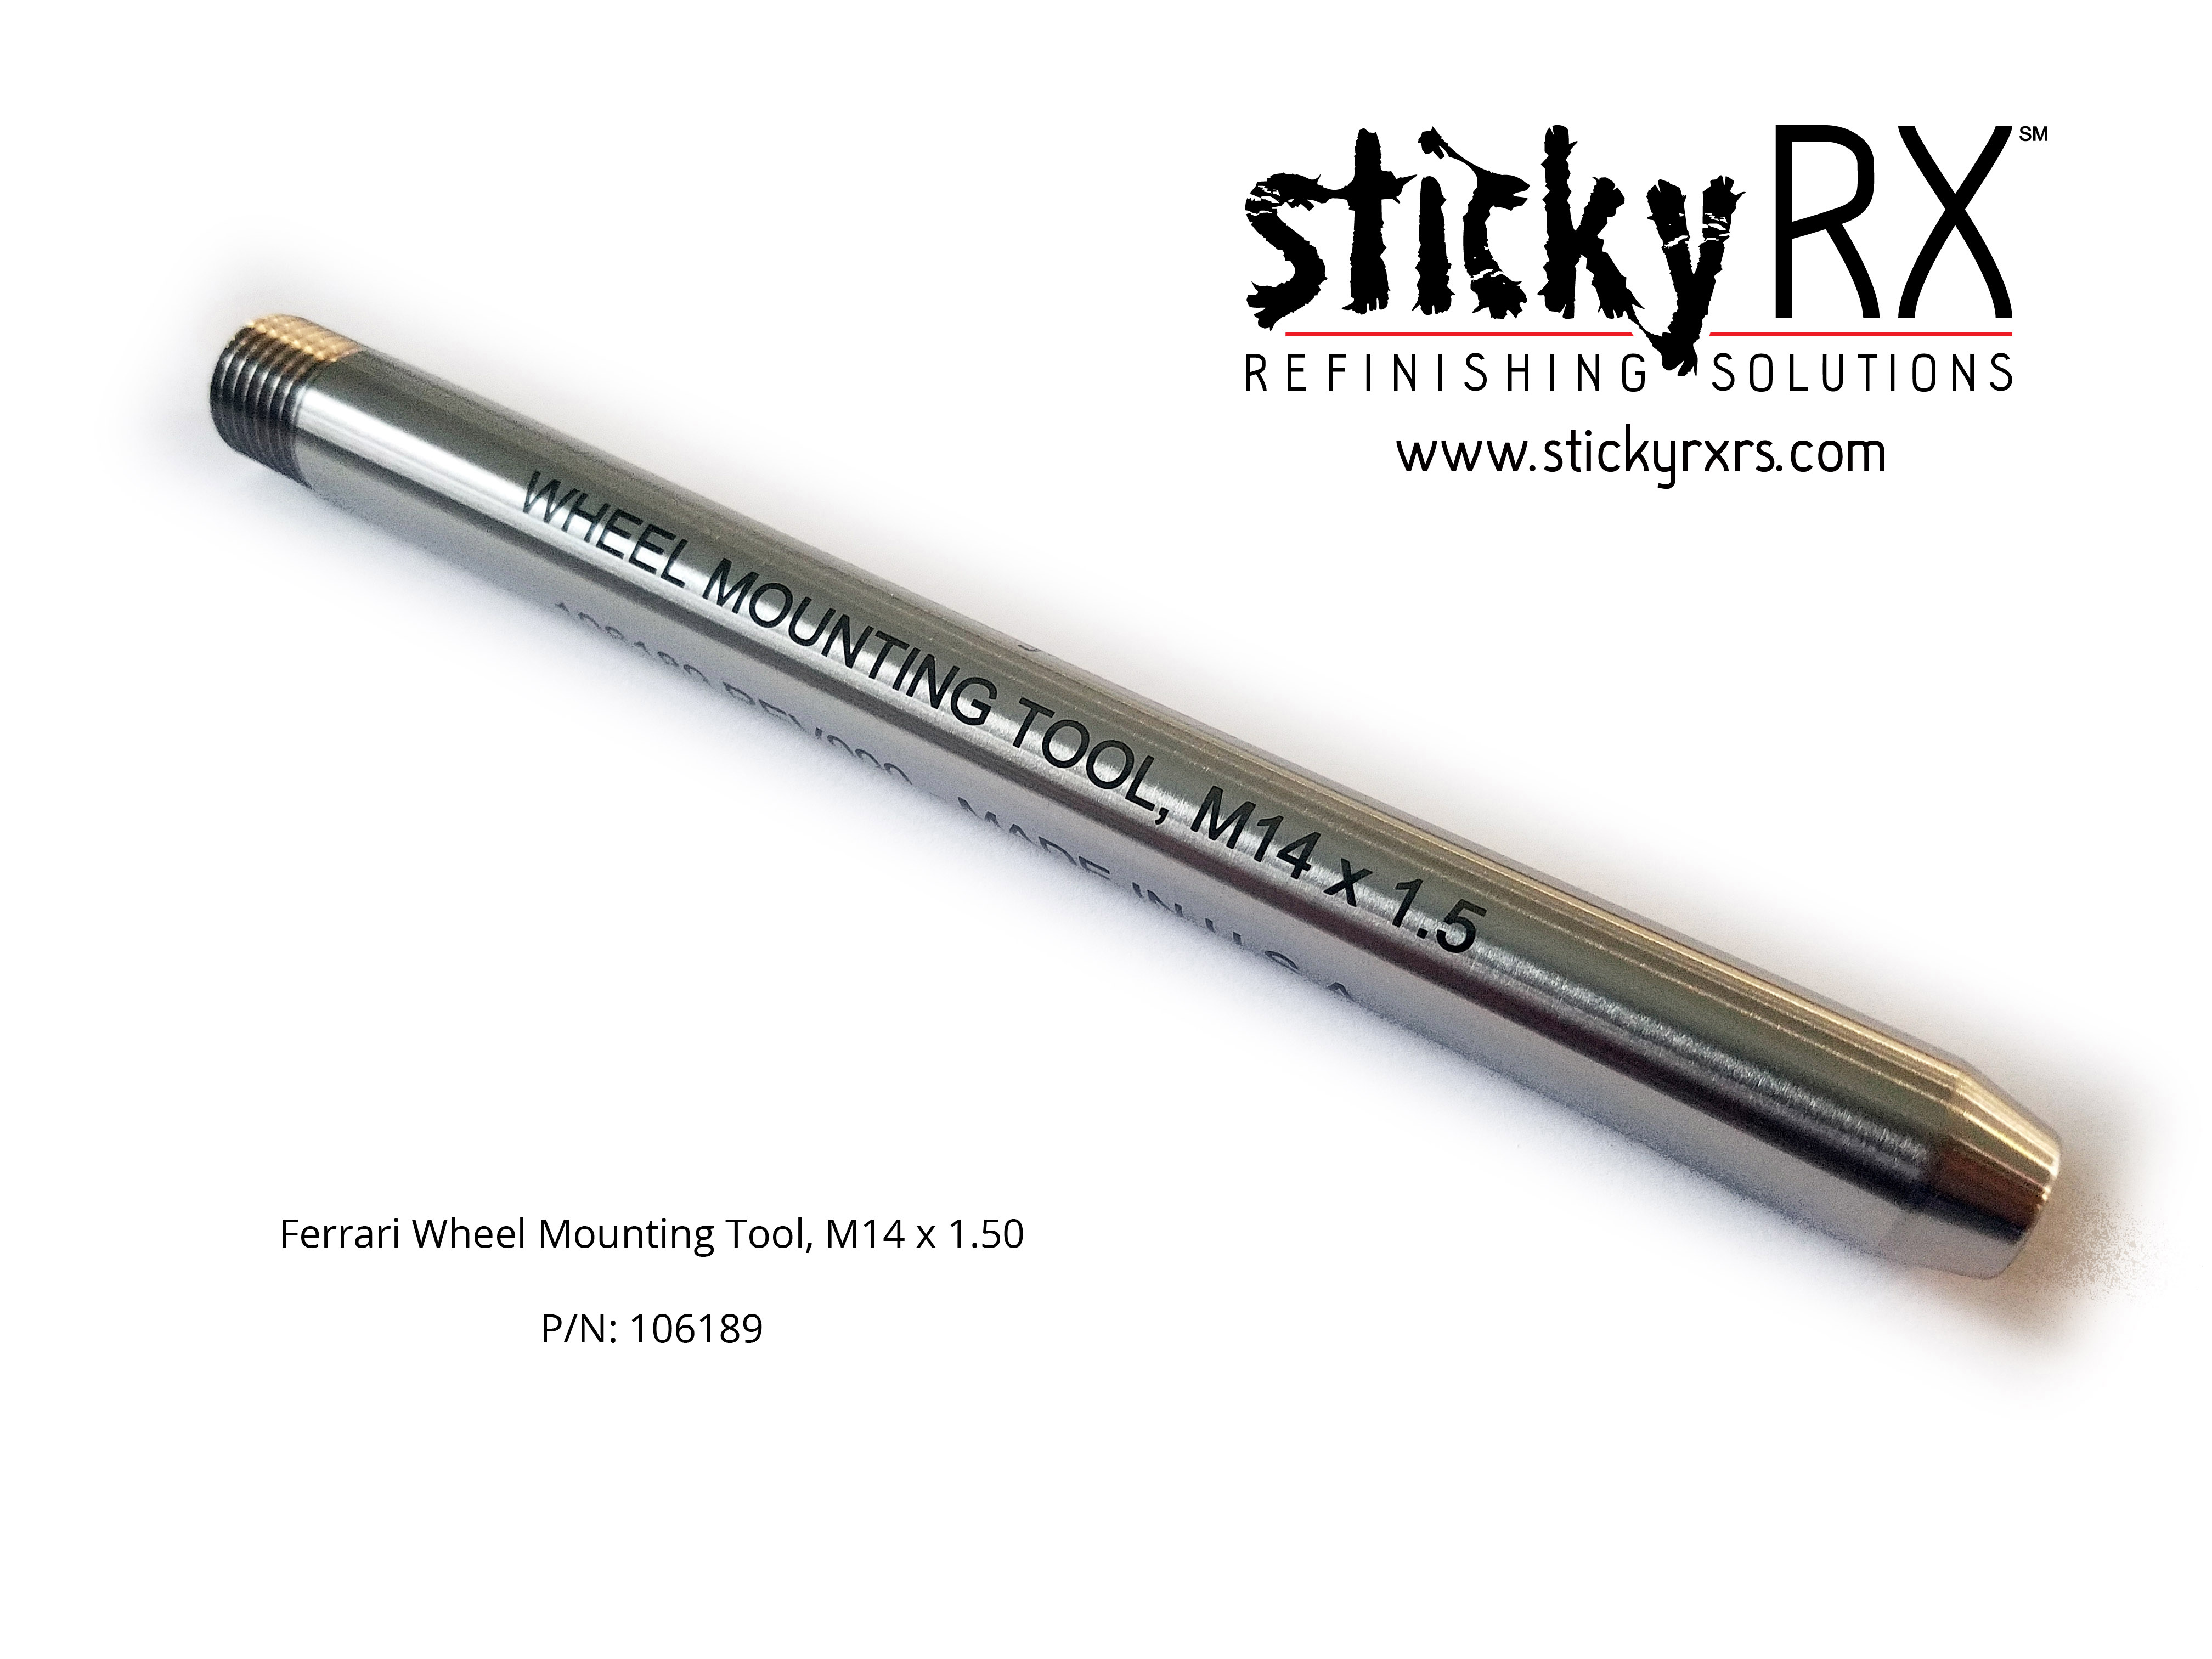 Sticky RX Refinishing Solutions Ferrari Wheel Mounting Tool 02